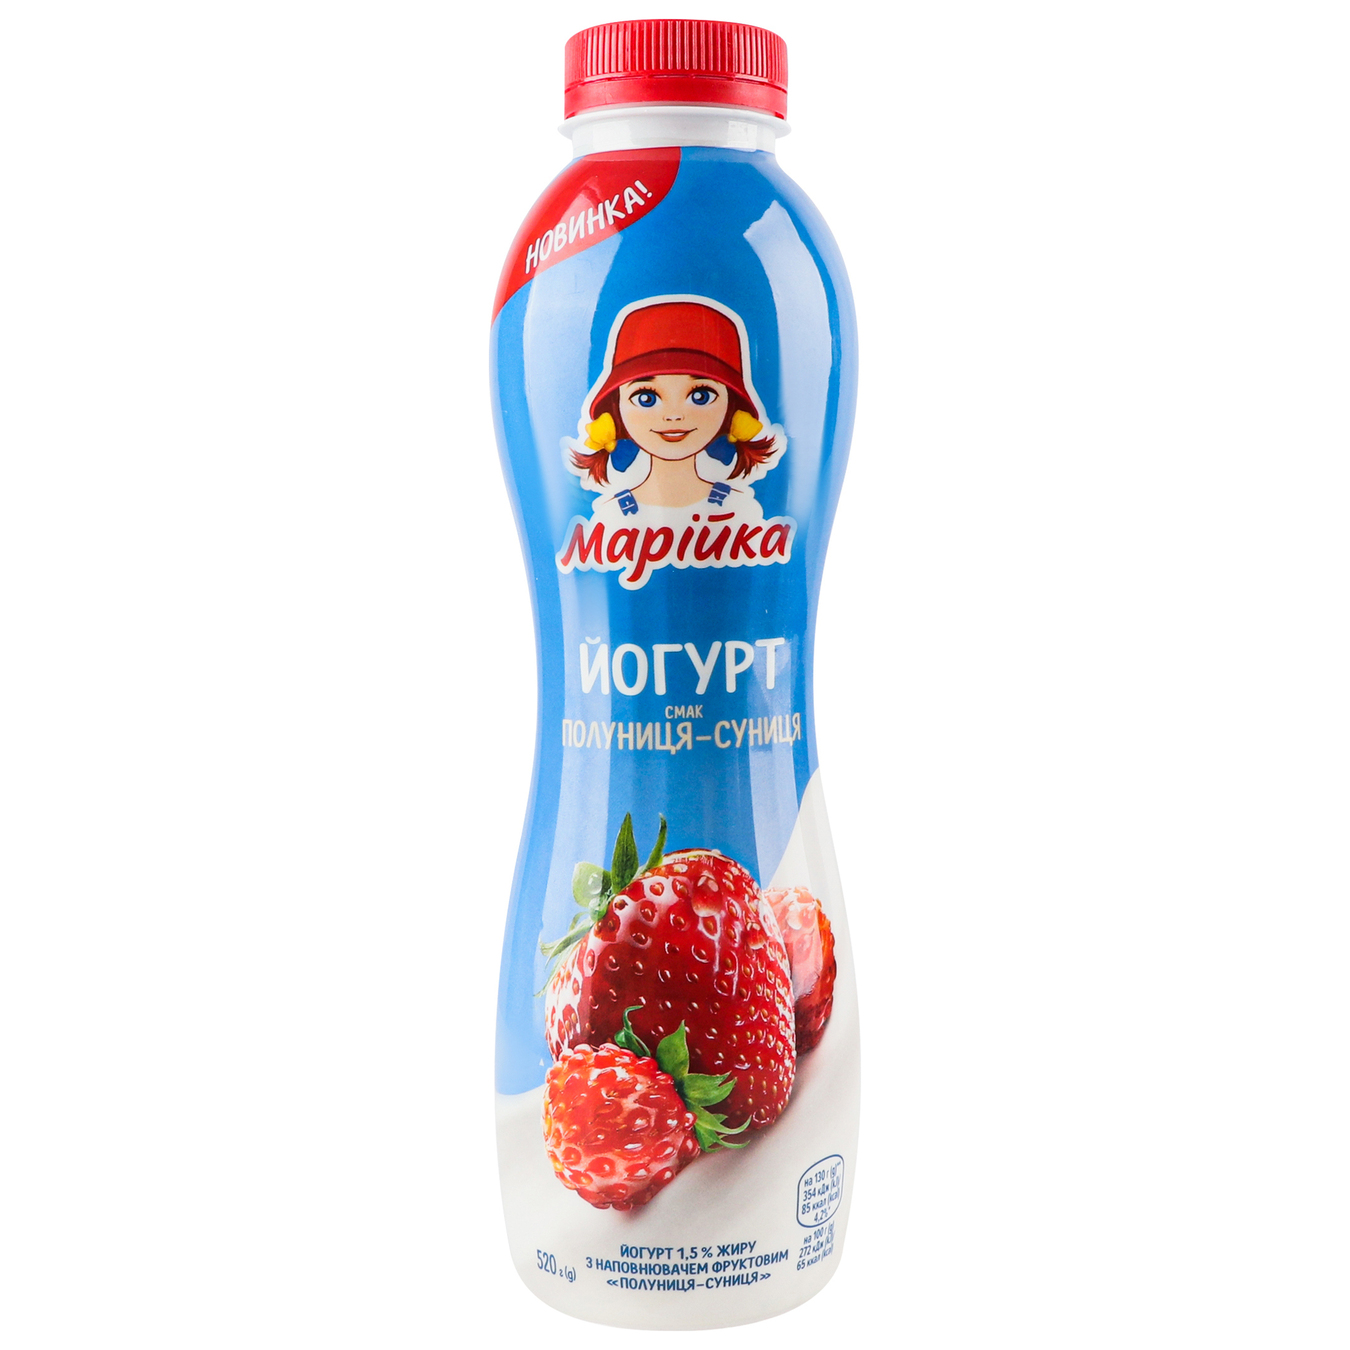 Mariyka drinking yogurt with strawberry-strawberry filling 1.5% PET bottle 520g